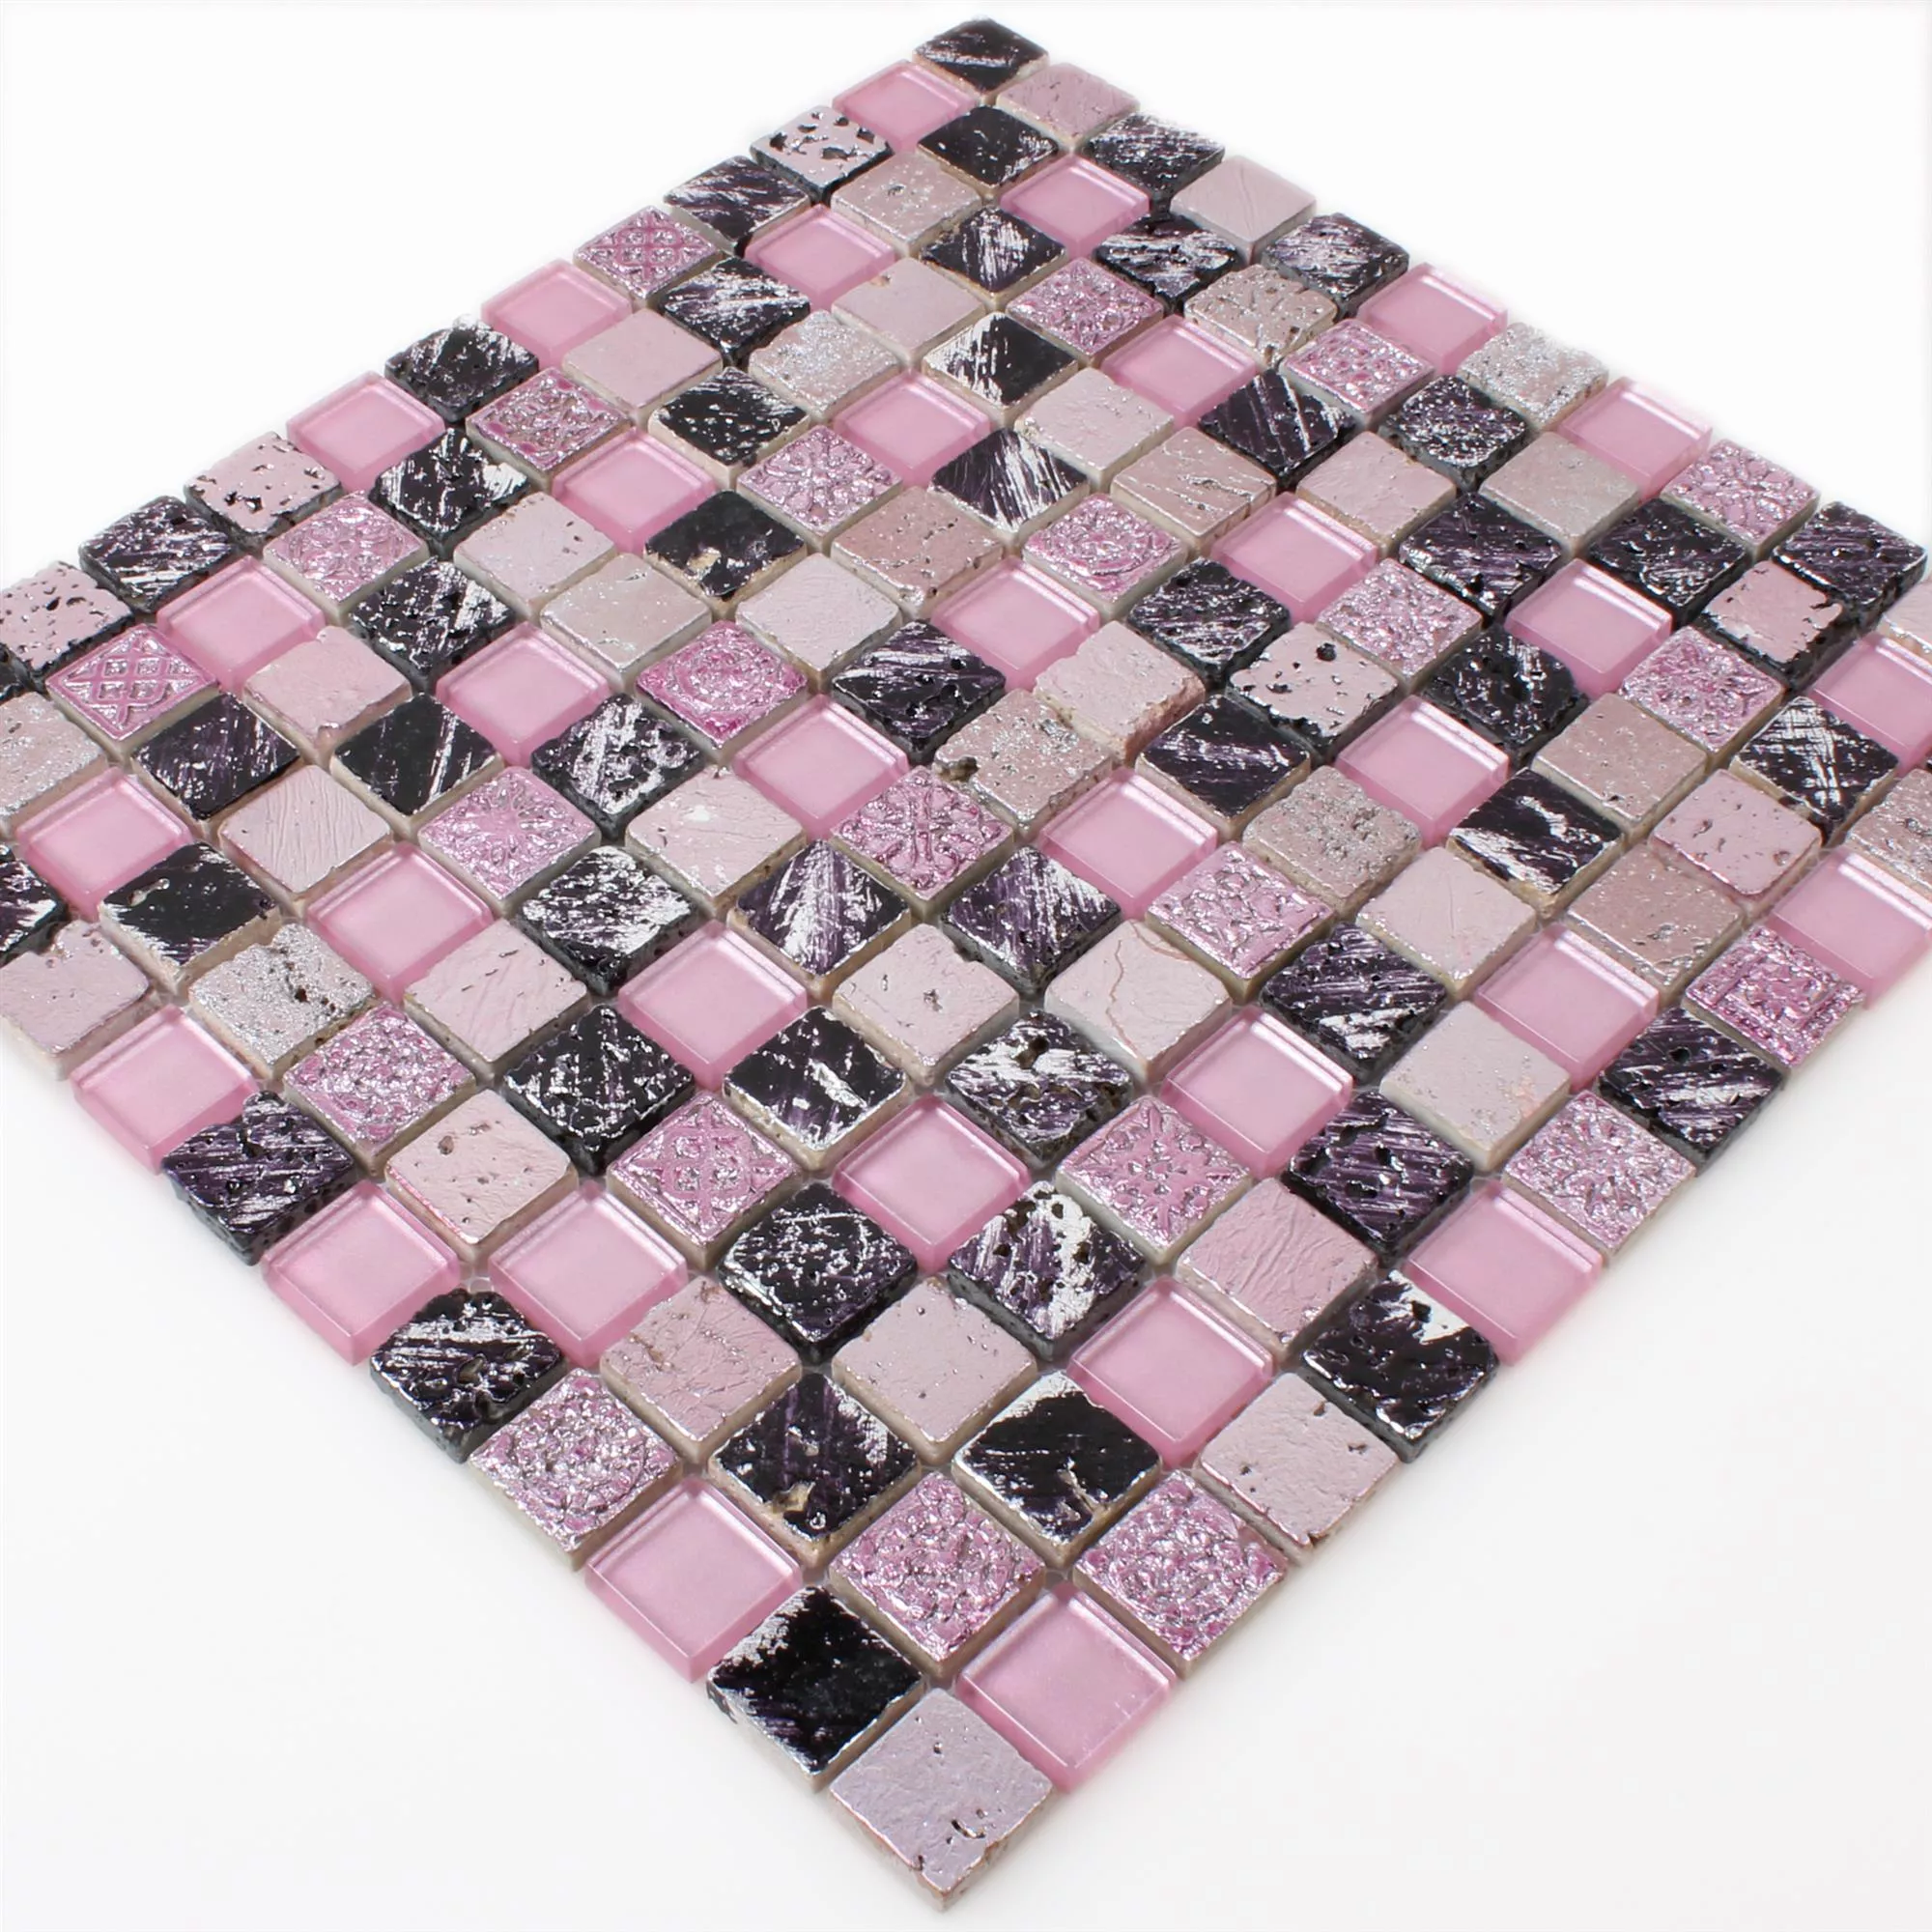 Mozaik Pločice Staklo Smola Prirodni Kamen Pink Mix